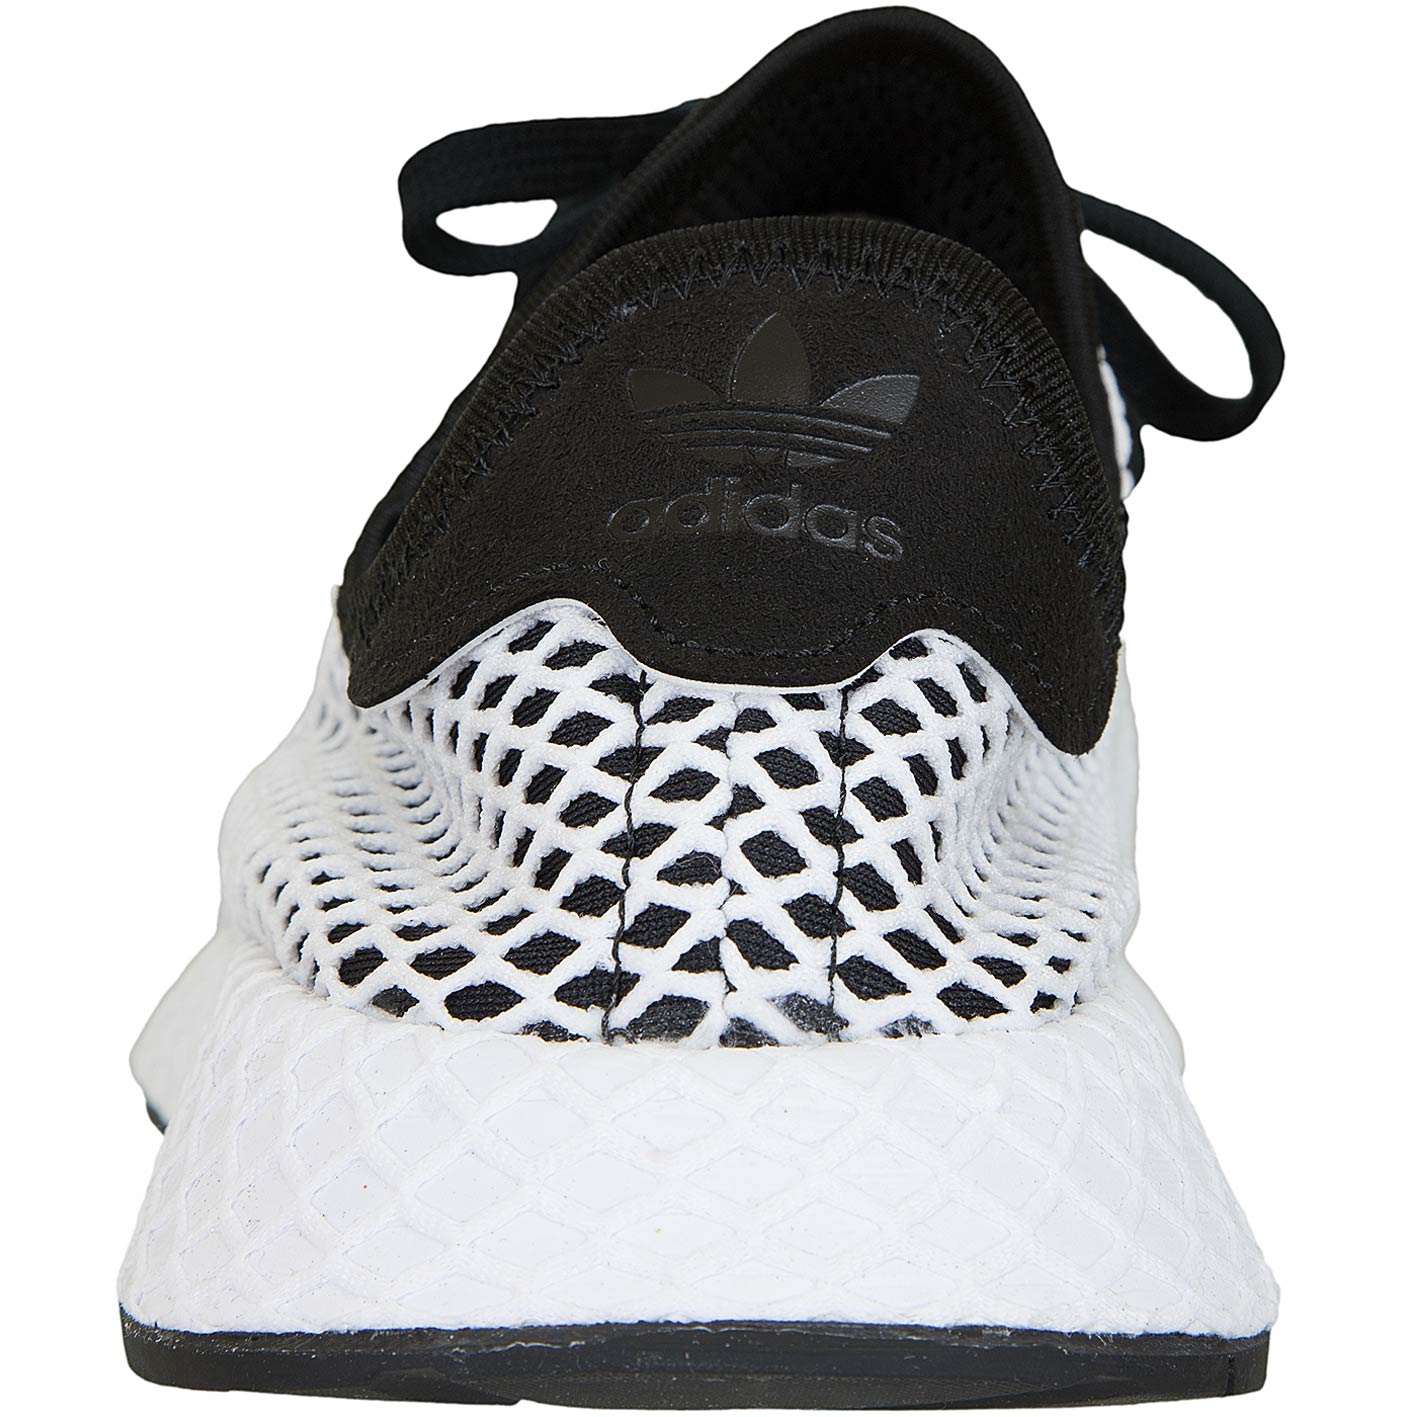 ☆ Adidas Originals Sneaker Deerupt Runner schwarz/weiß - hier bestellen!